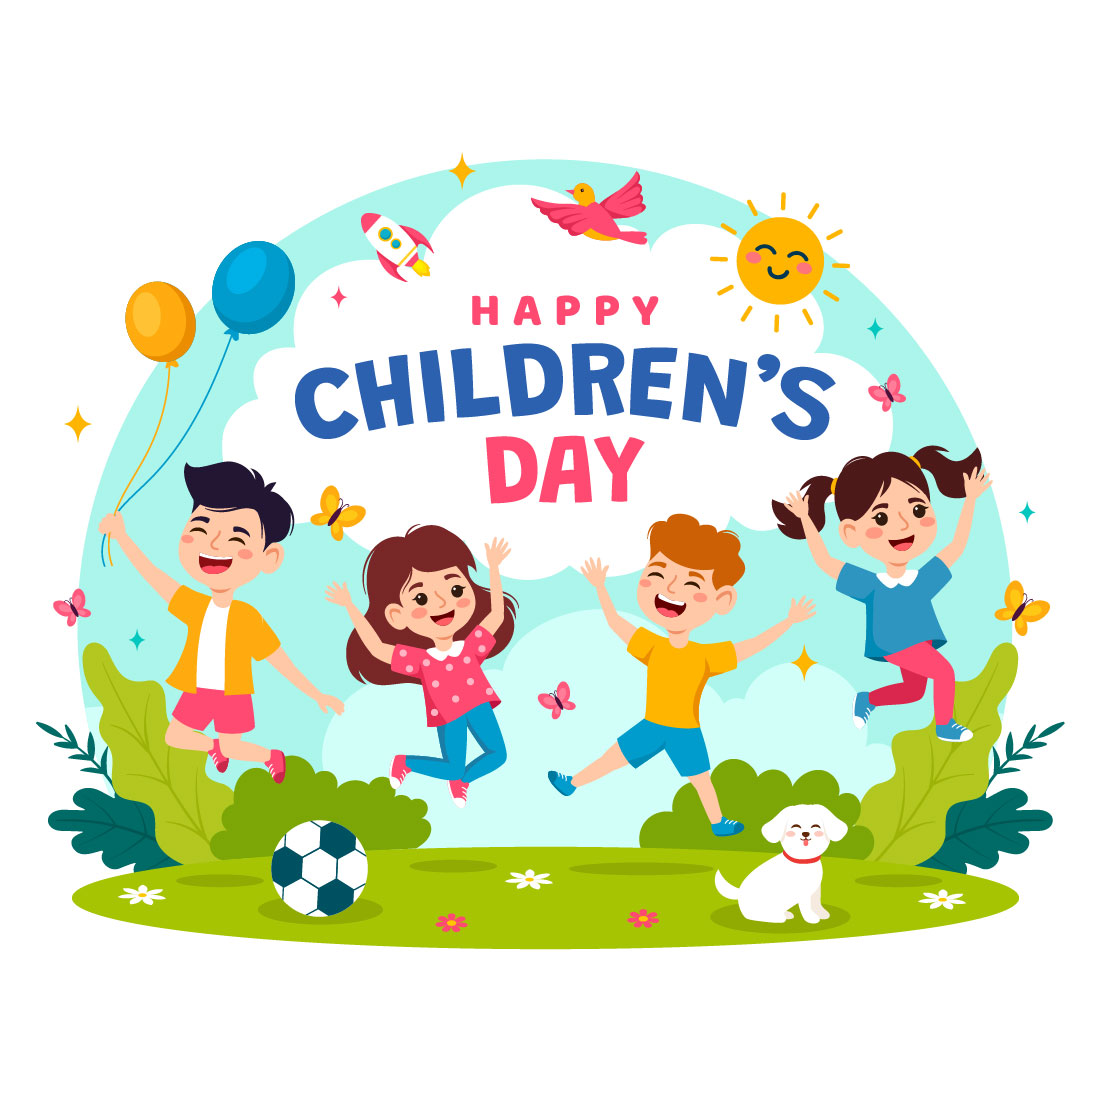 12 Happy Children Day Illustration cover image.